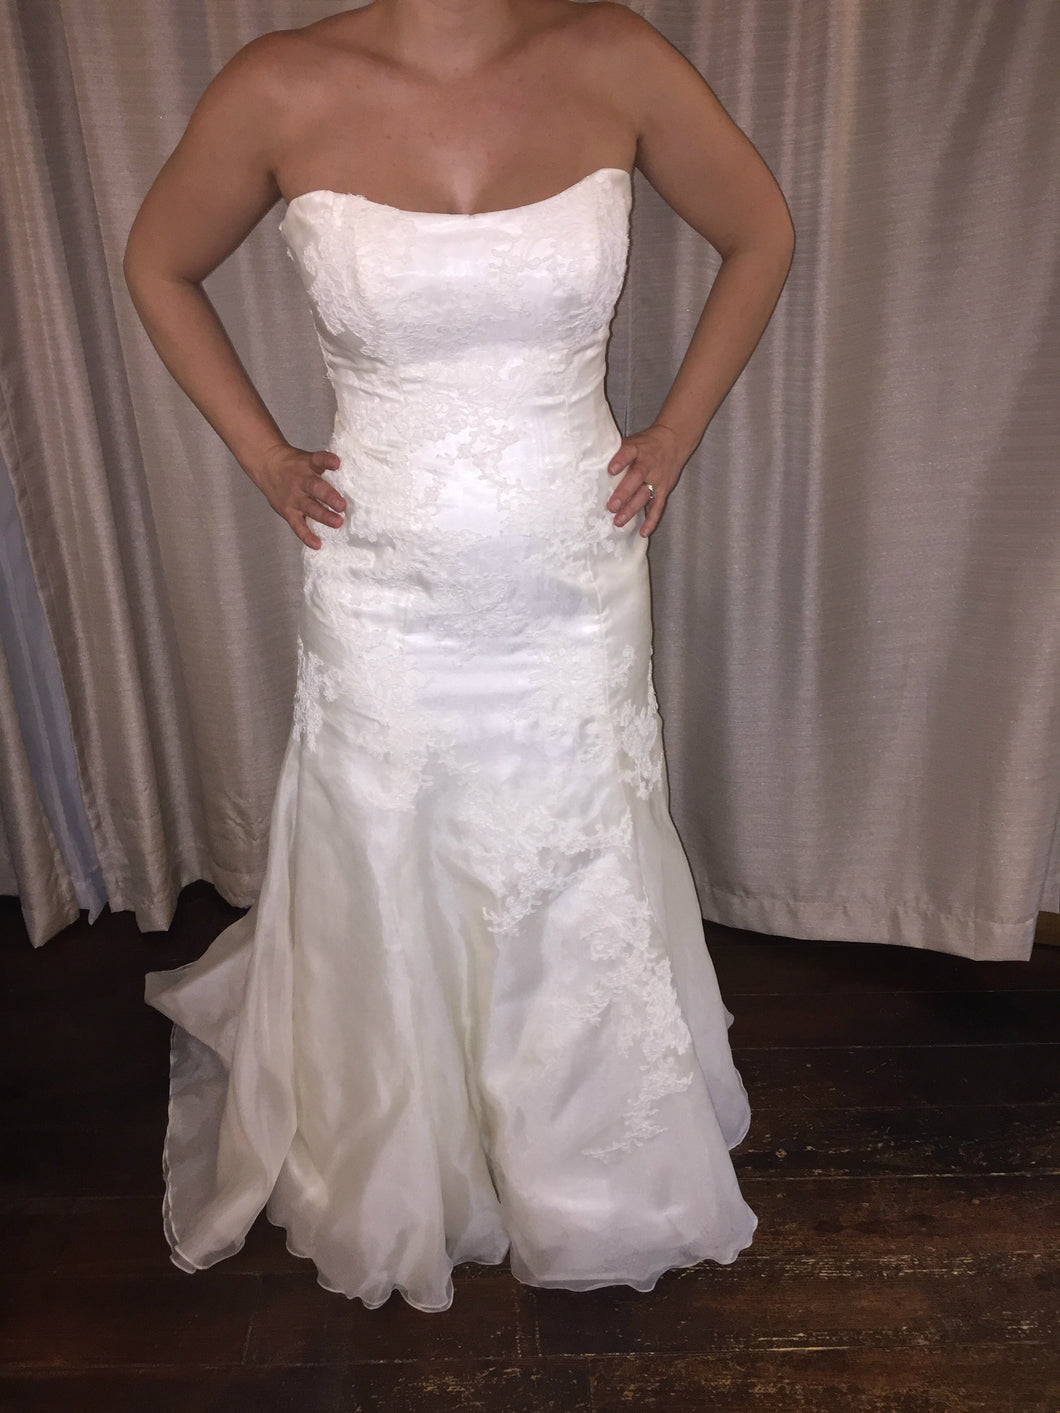 Marisa '737' size 12 sample wedding dress front view on bride